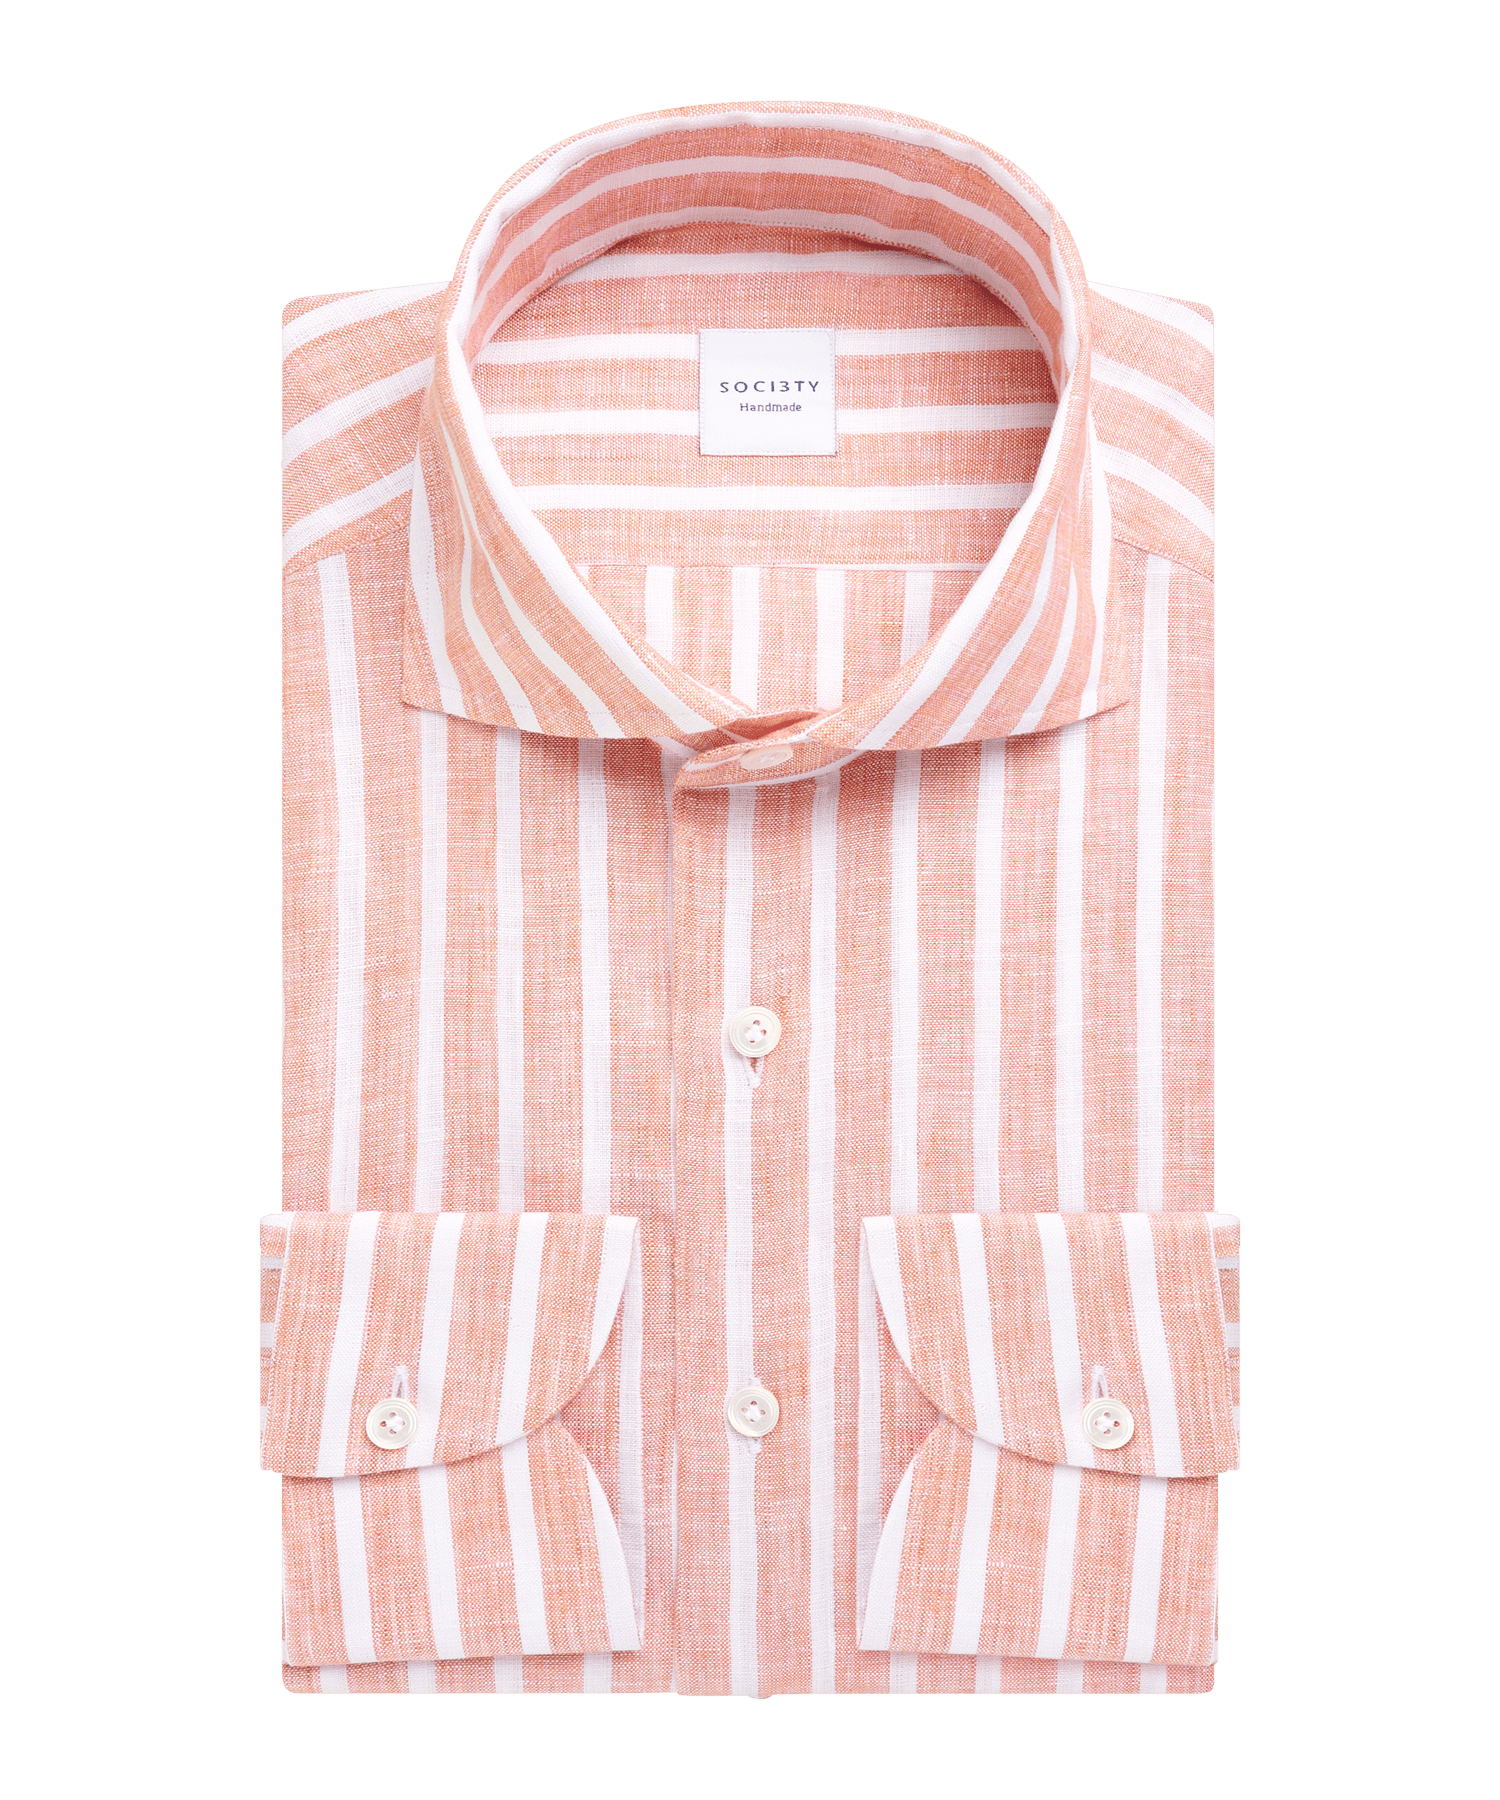 SOCI3TY Handmade Linnen overhemd gestreept perzik - The Society Shop